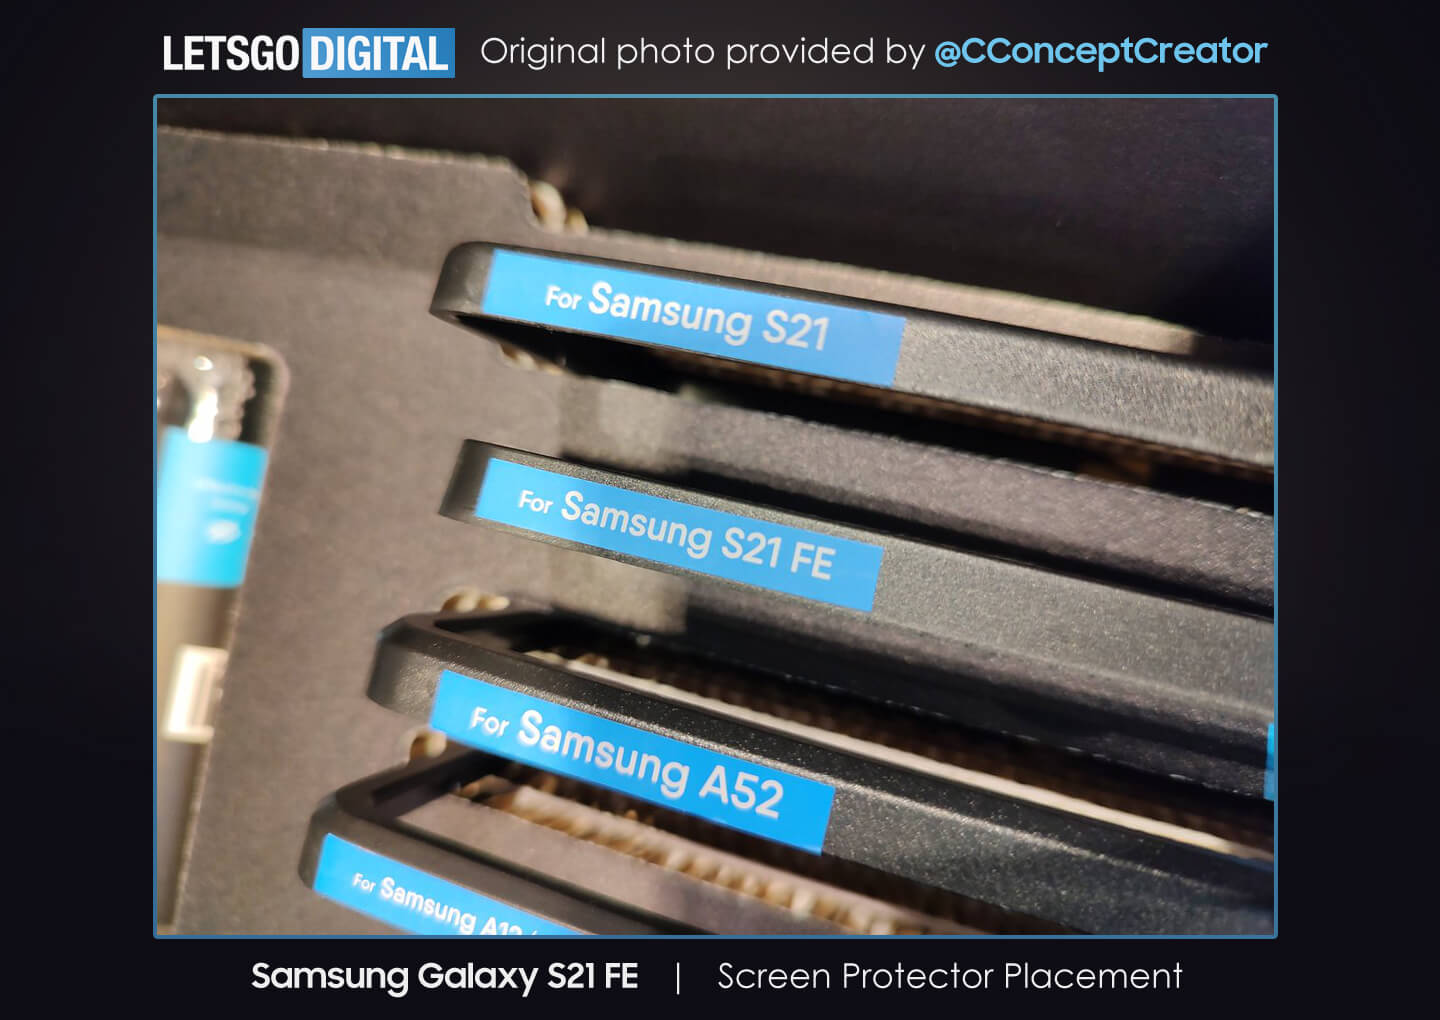 Samsung S21 FE screen protector